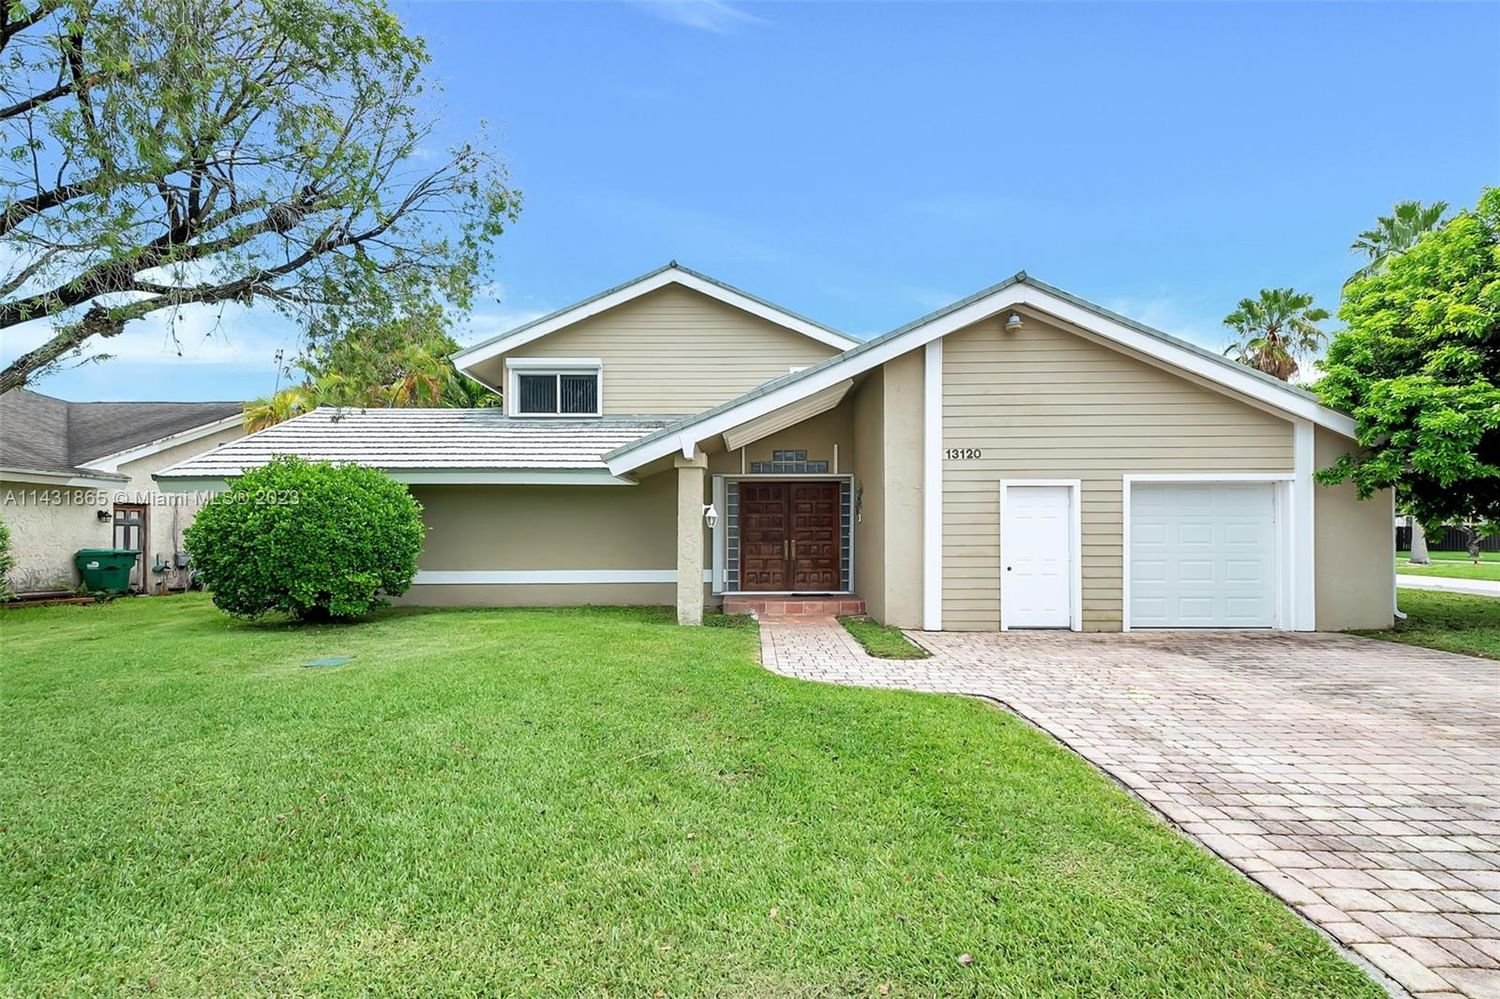 Real estate property located at 13120 117 St, Miami-Dade County, Miami, FL